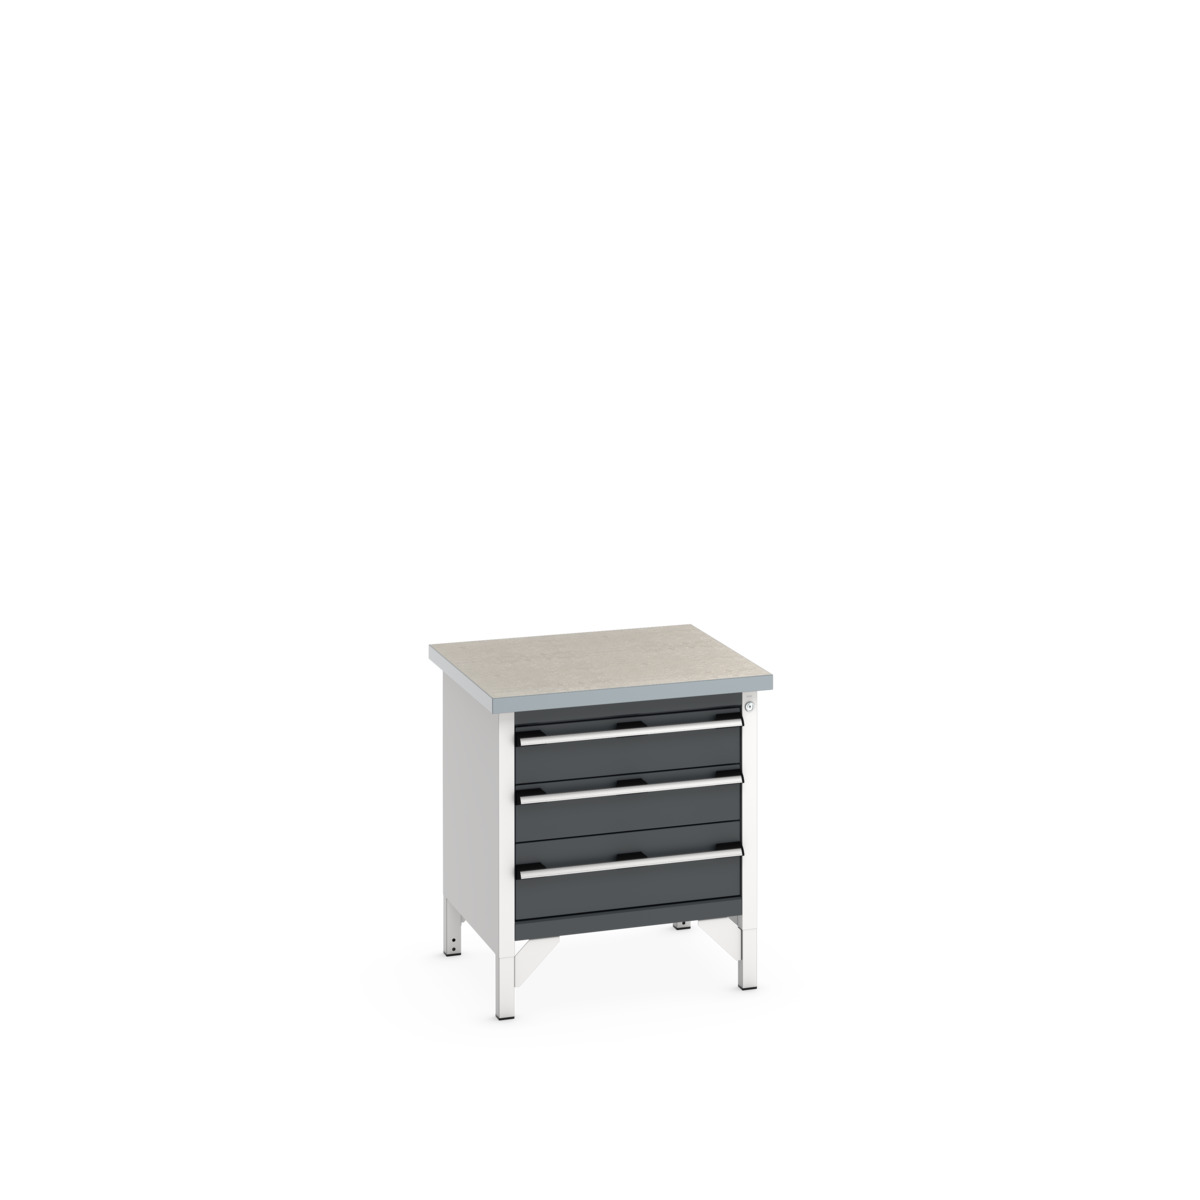 41002012. - cubio storage bench (lino)